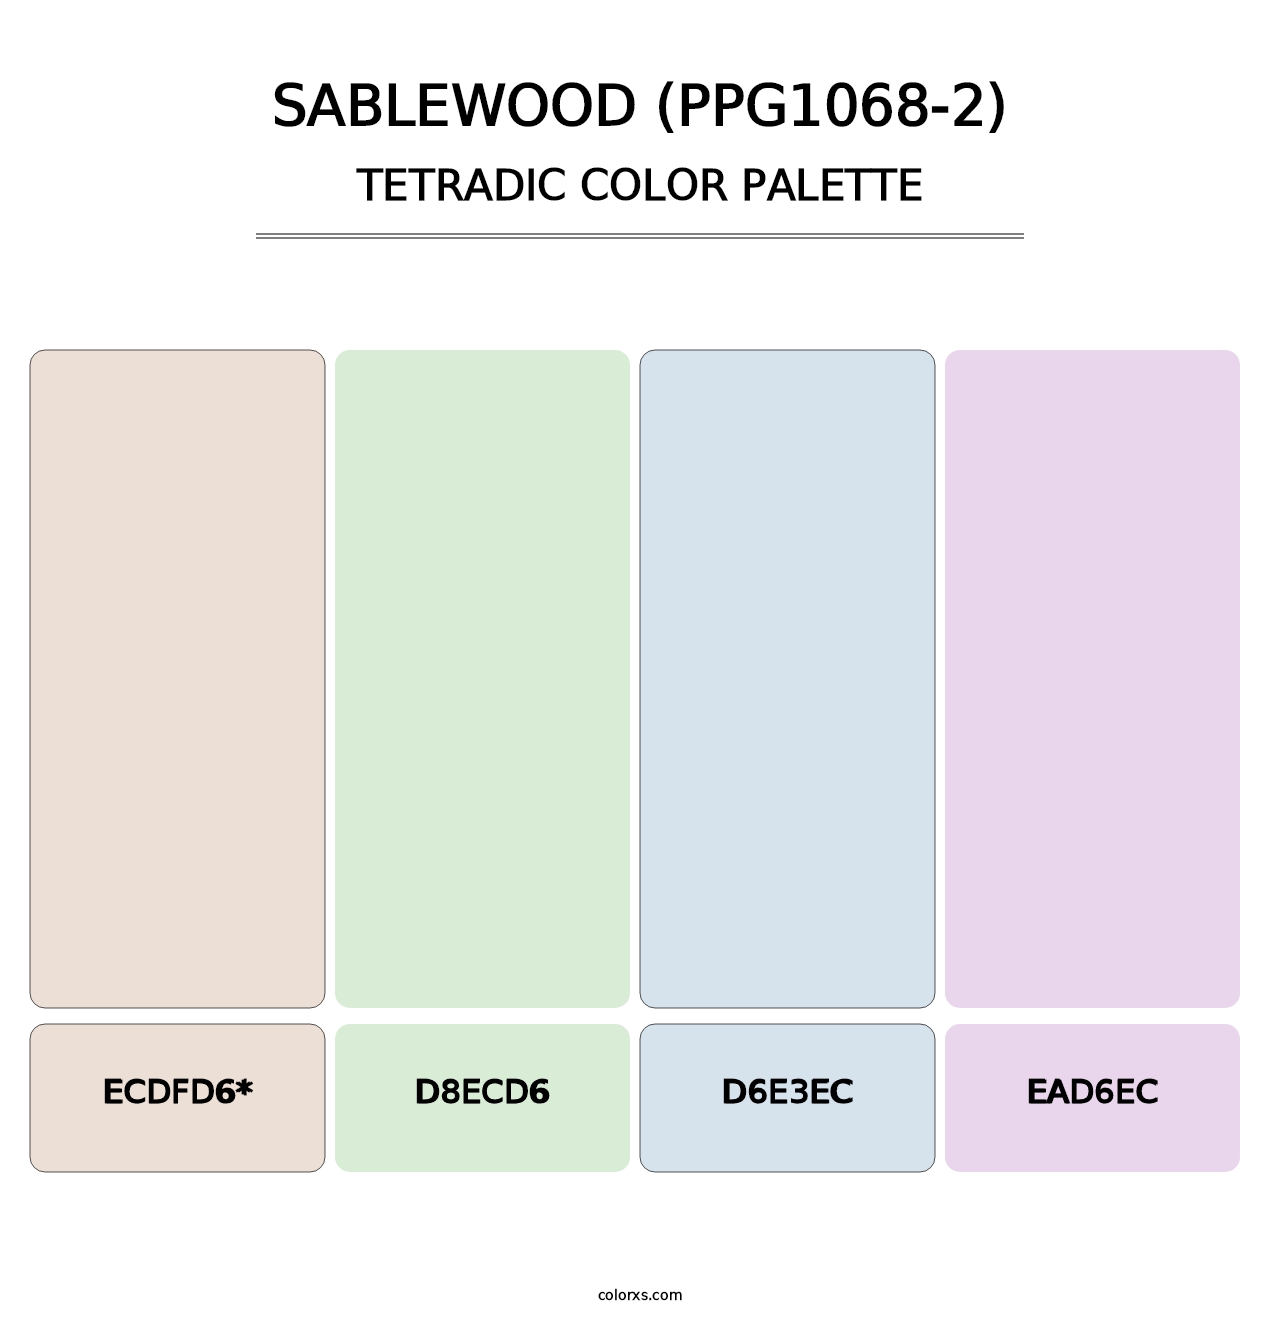 Sablewood (PPG1068-2) - Tetradic Color Palette